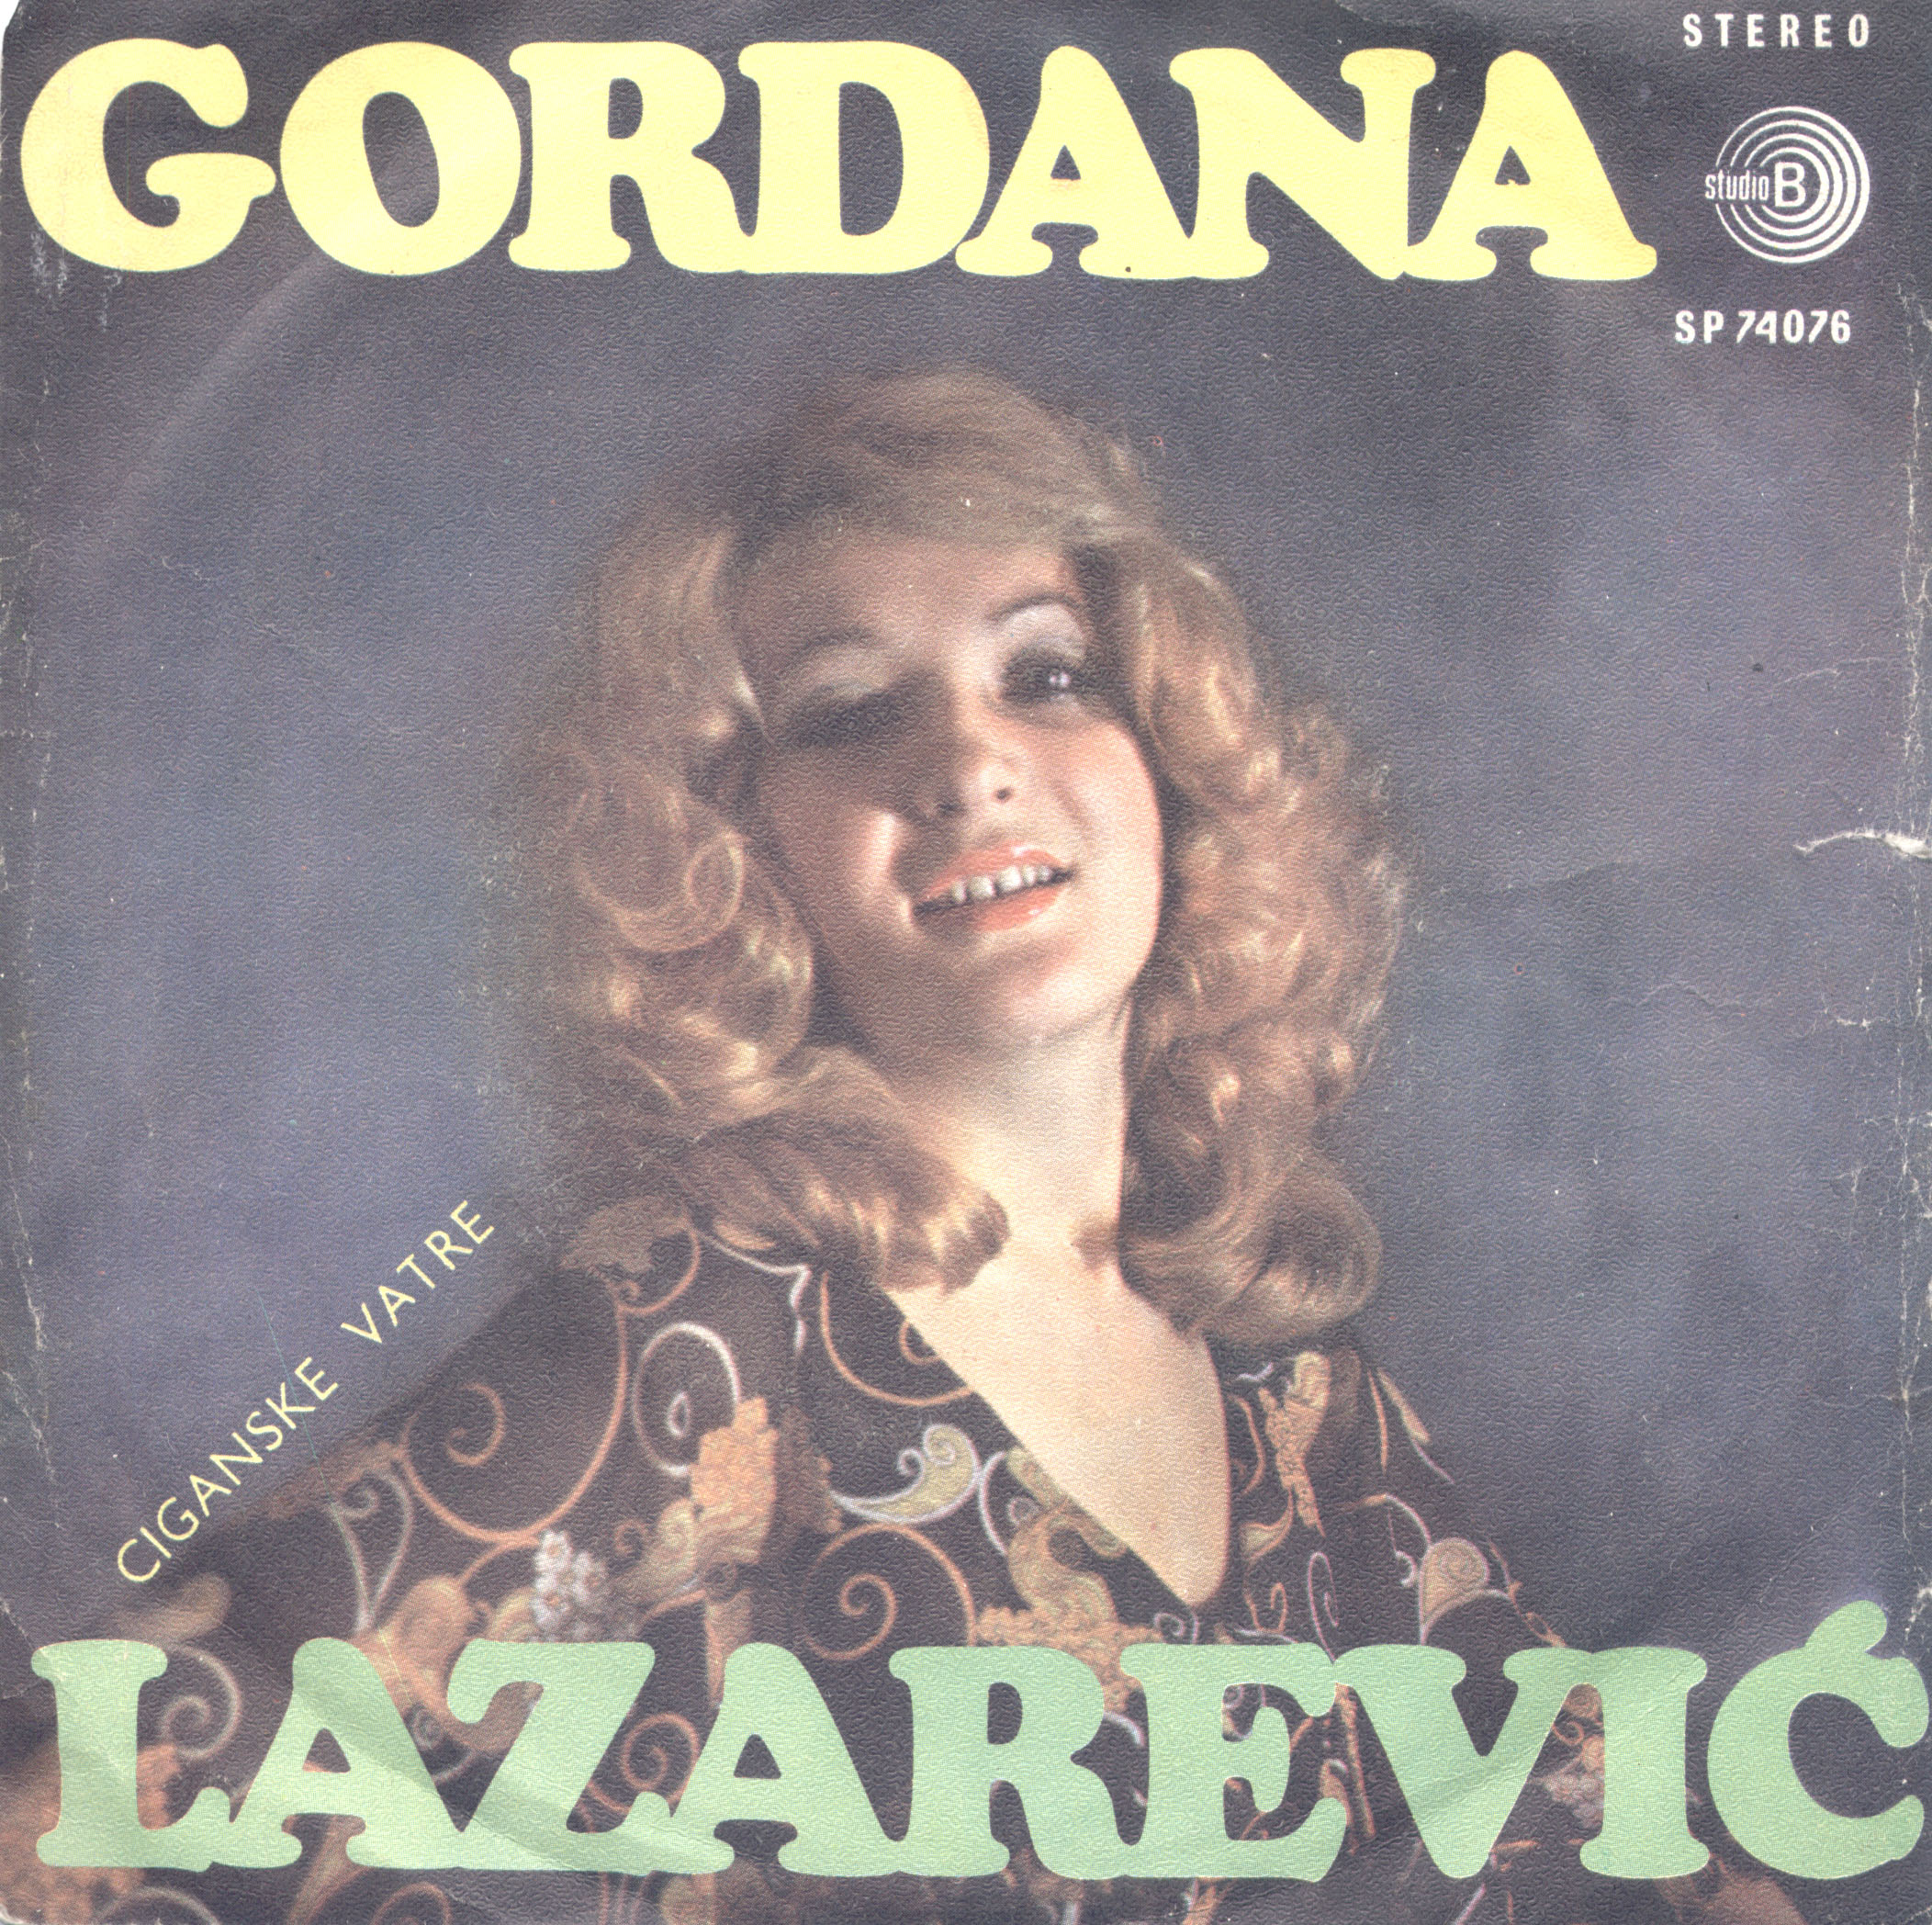 gordanalazarevic 1976 sin